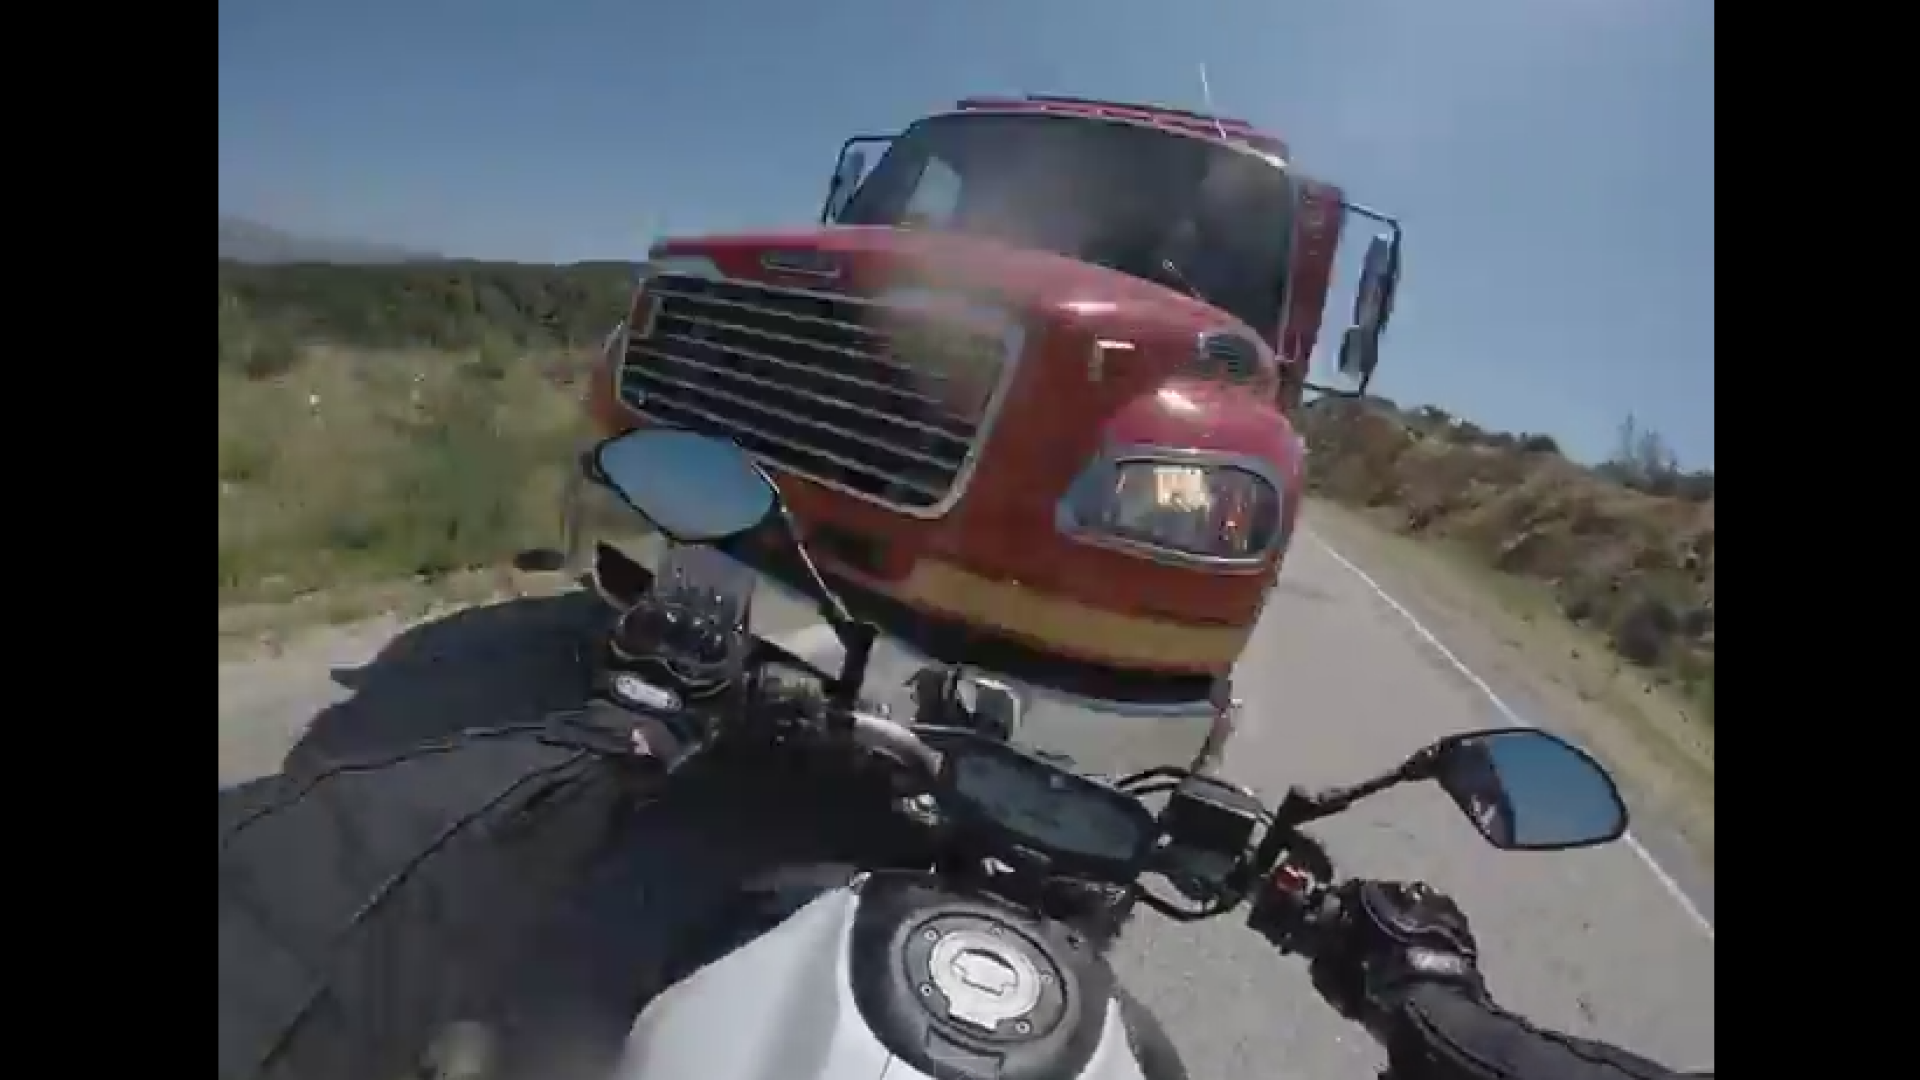 motociclist California